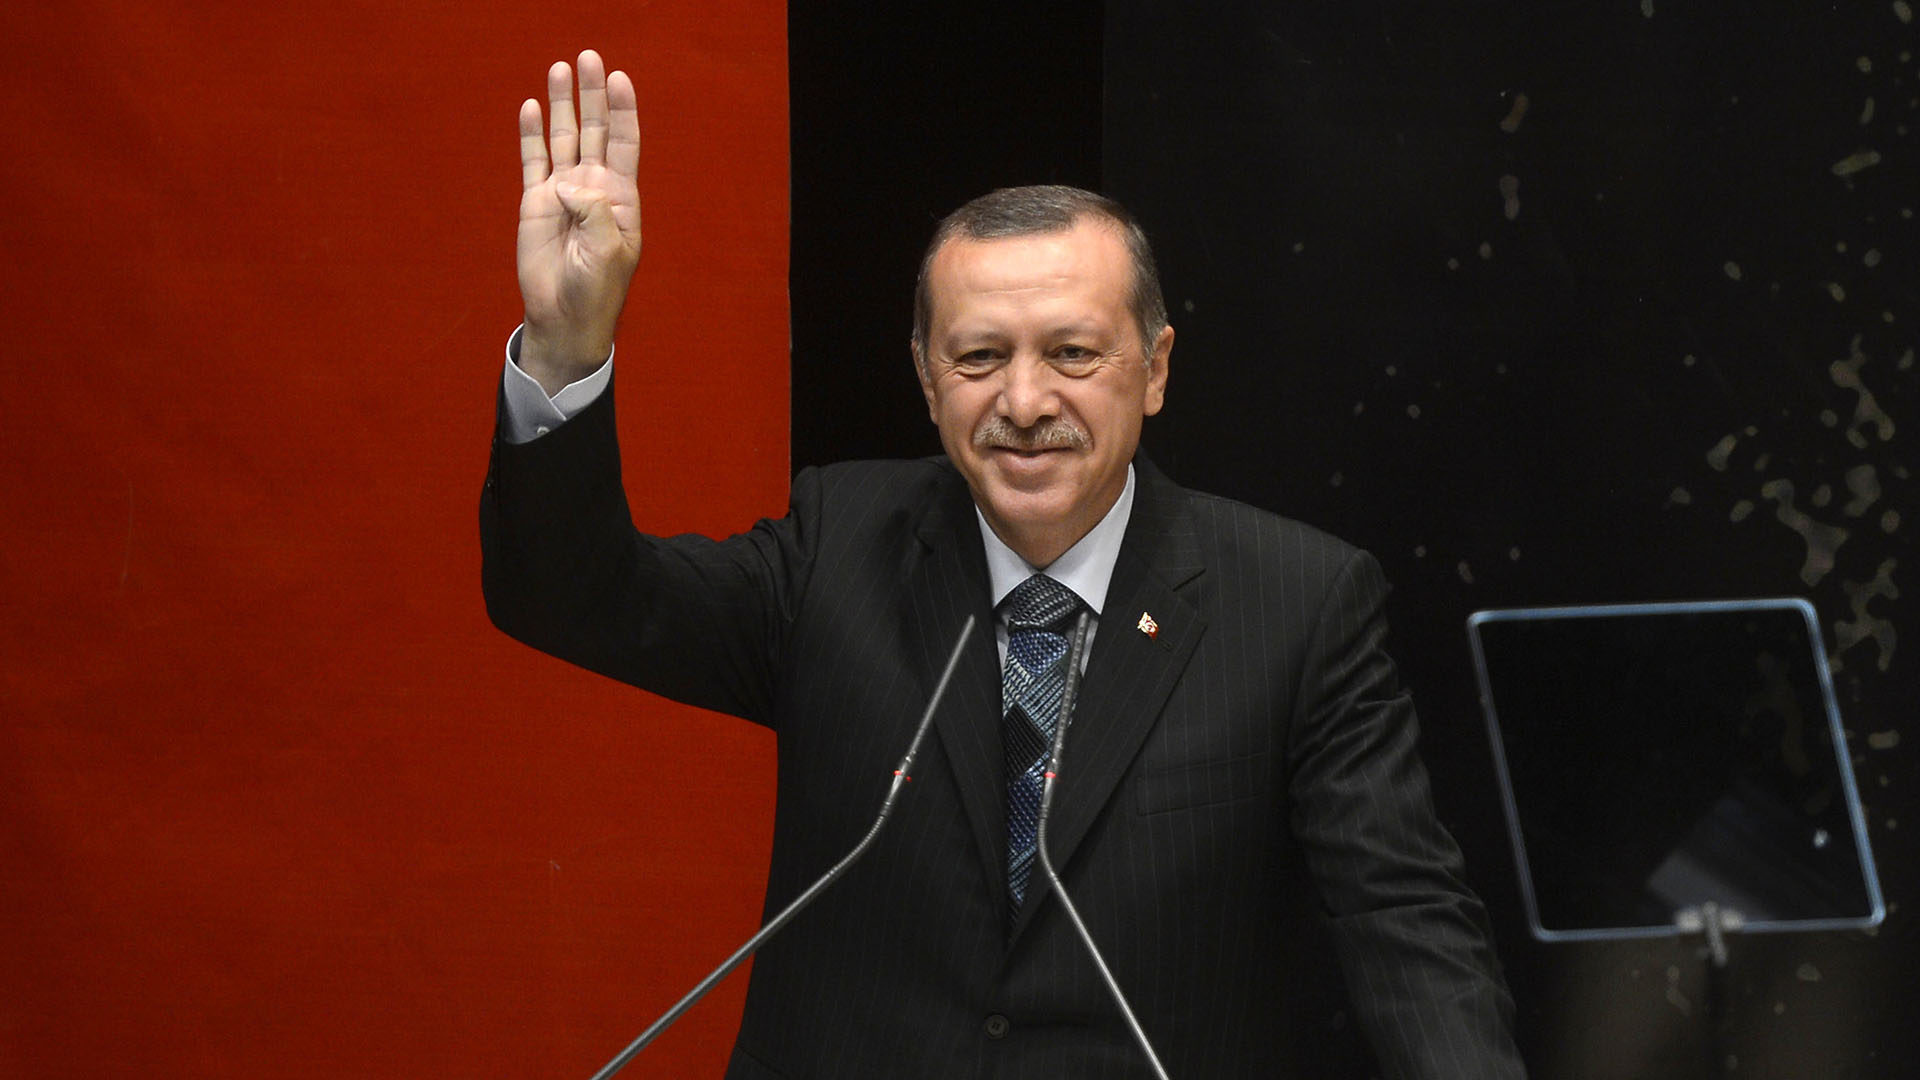 Le président turc Recep Tayyip Erdoğan reçu par le pape | Wikimedia Commons / DDP / Evrim Aydın - Anadolu Ajansı